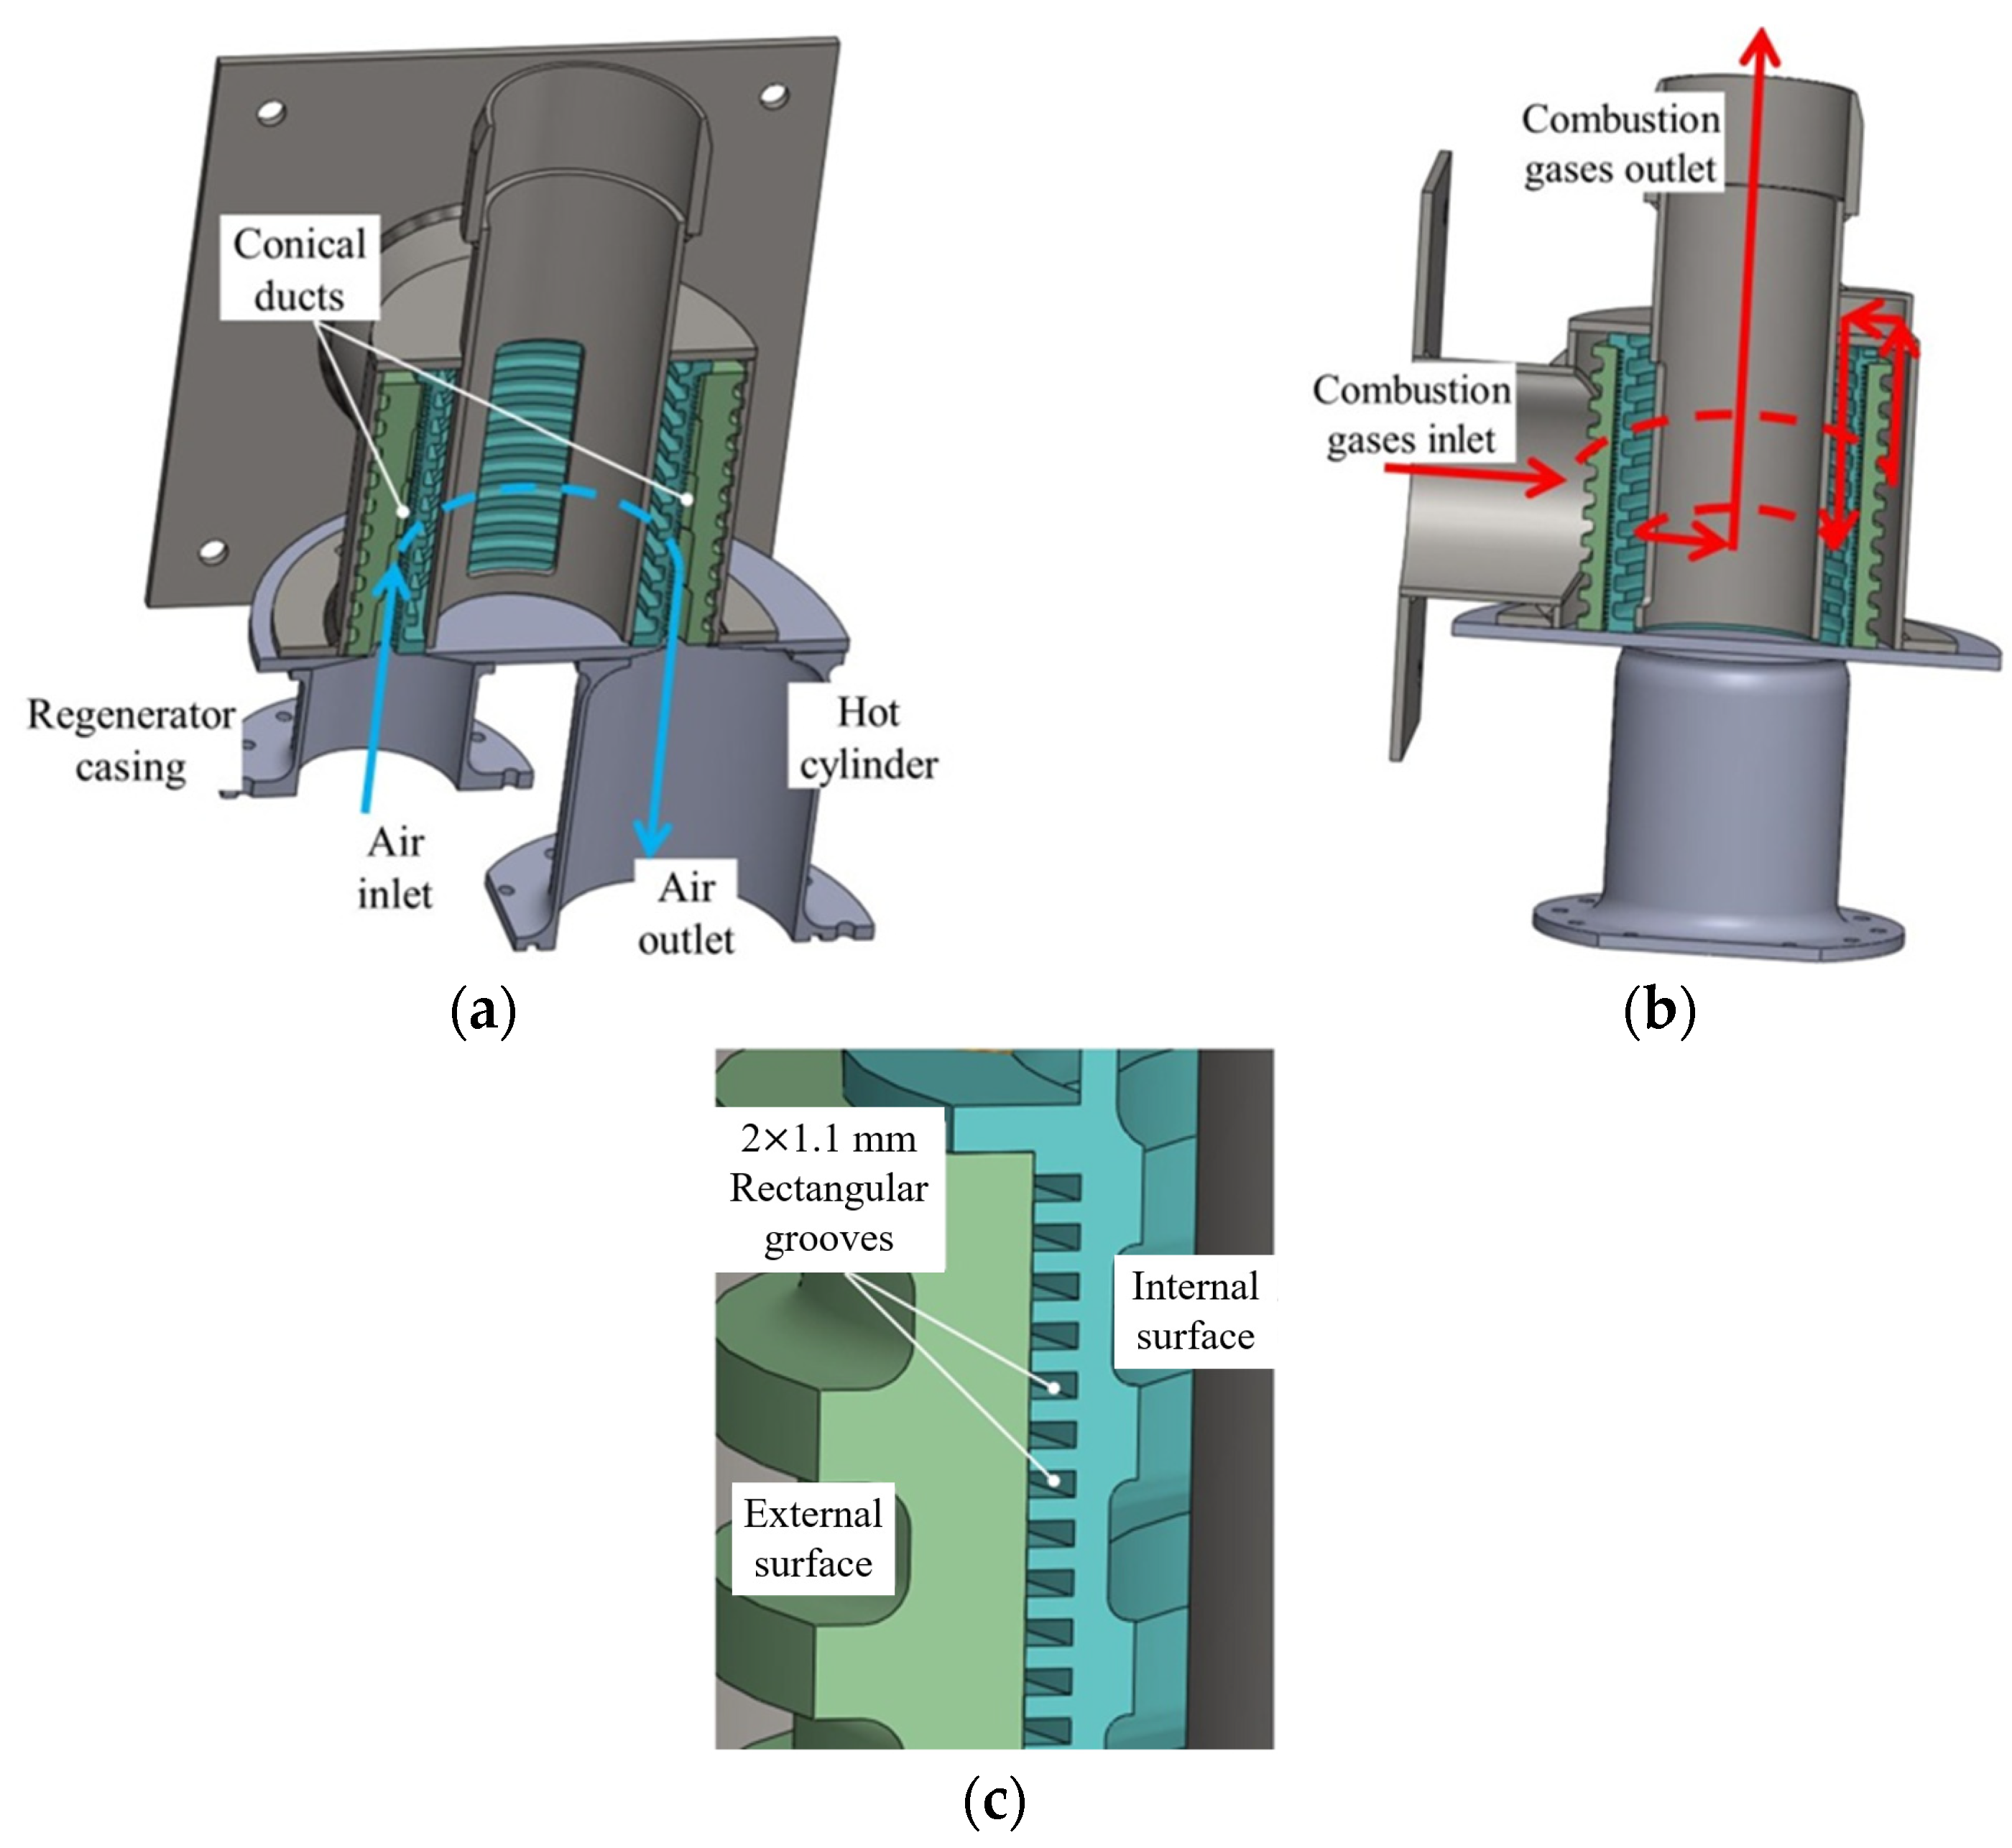 Speed-Controlled Single Cylinder Stirling Engine with Regulator